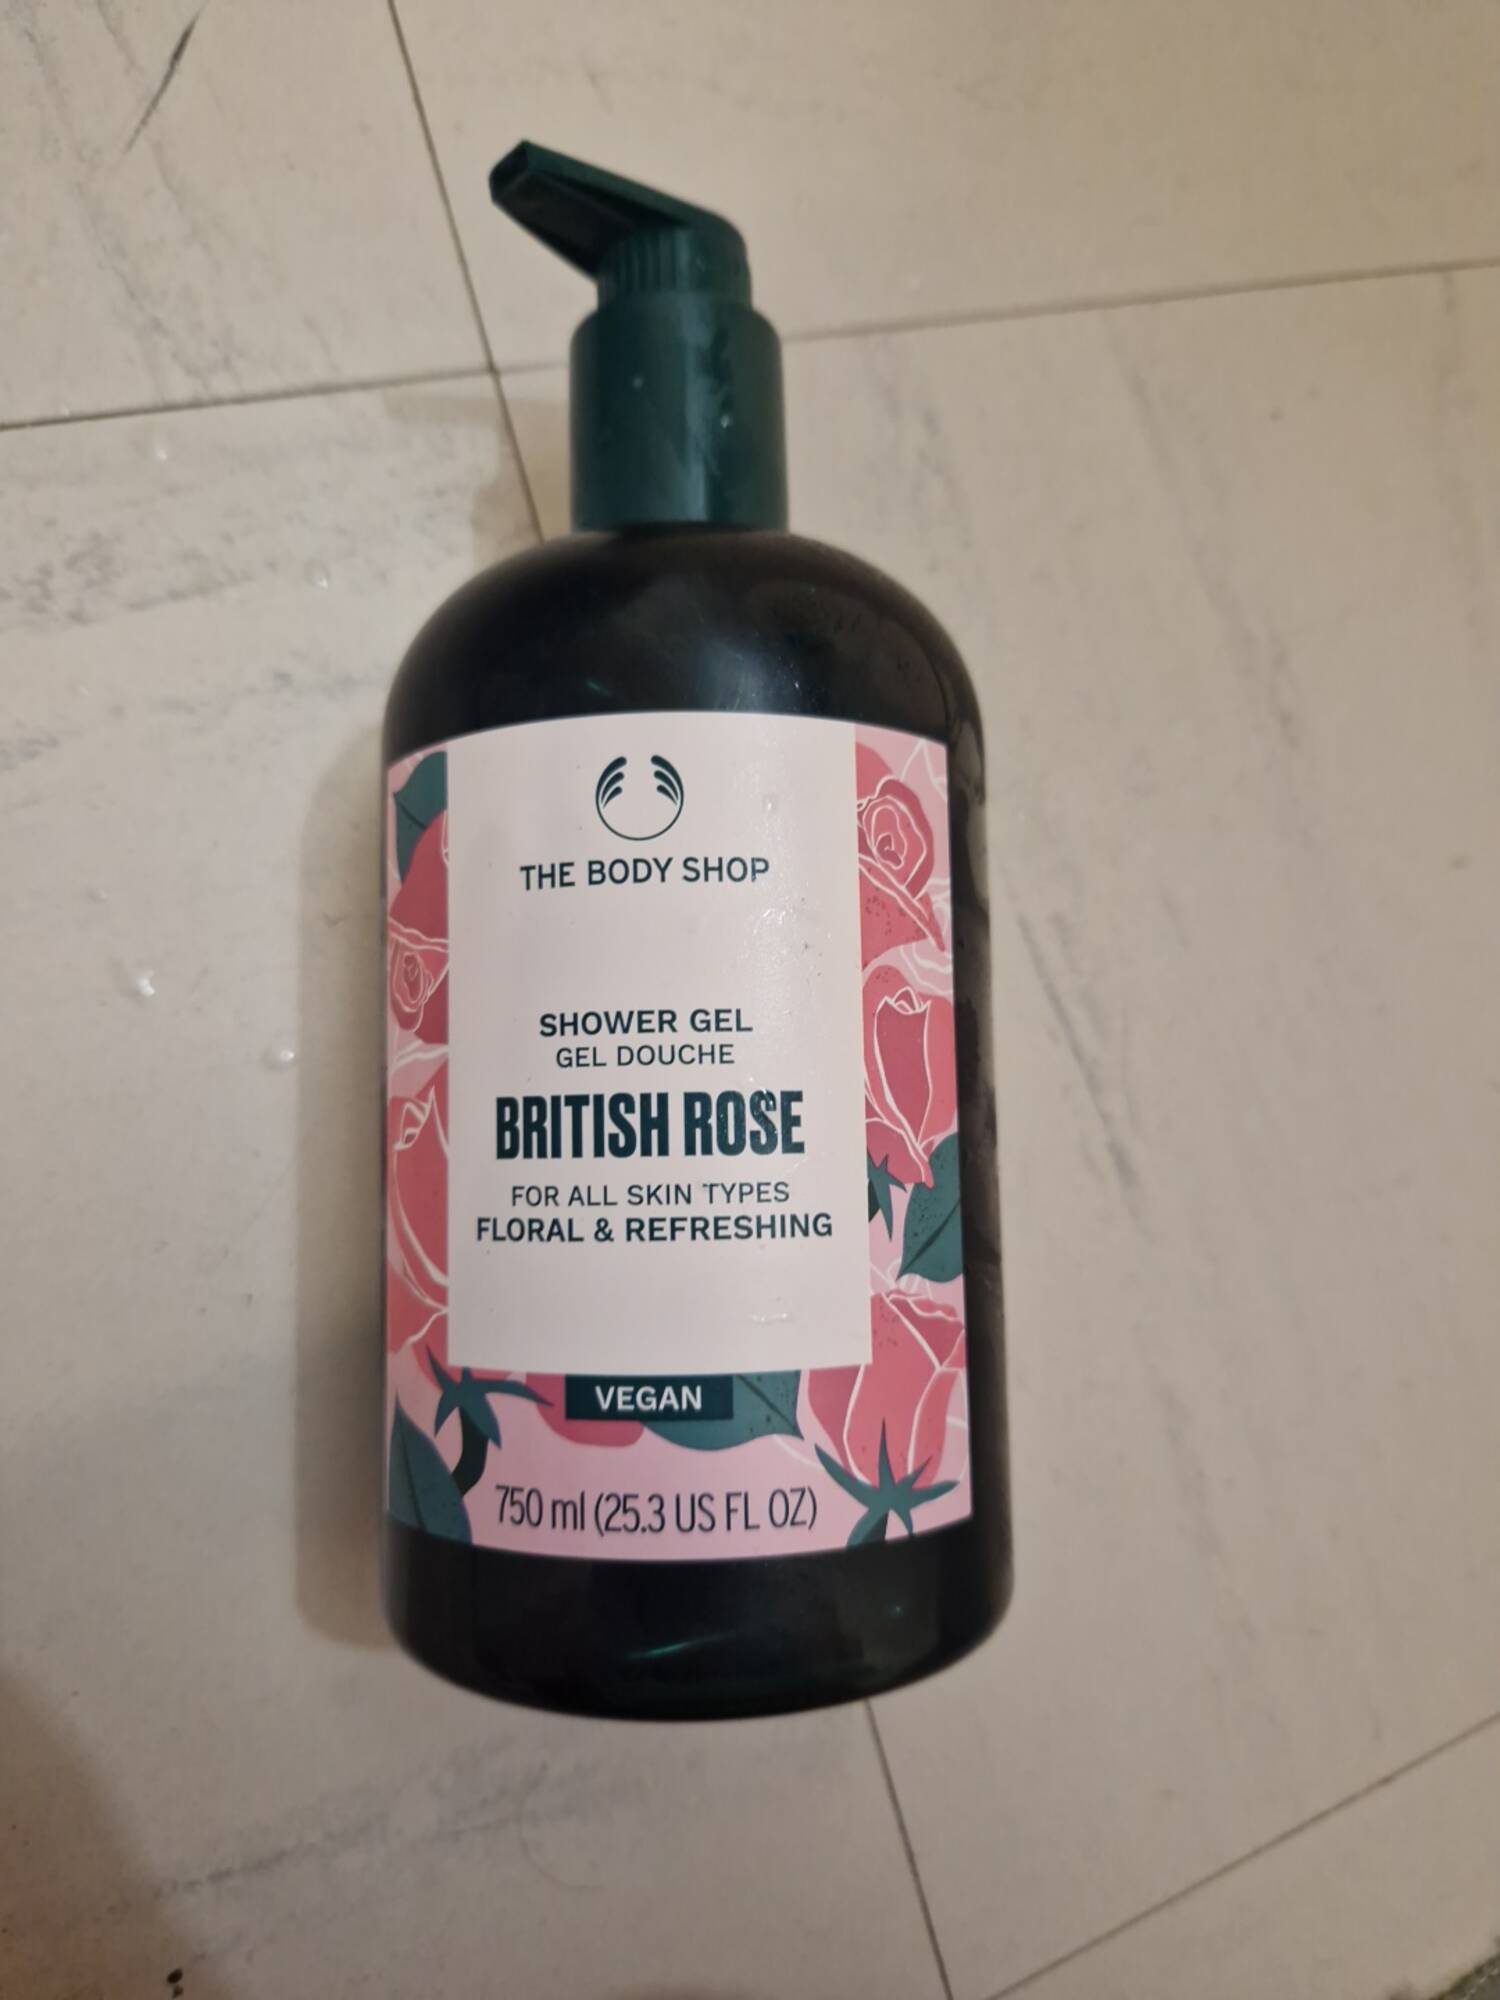 THE BODY SHOP - British rose - Gel douche